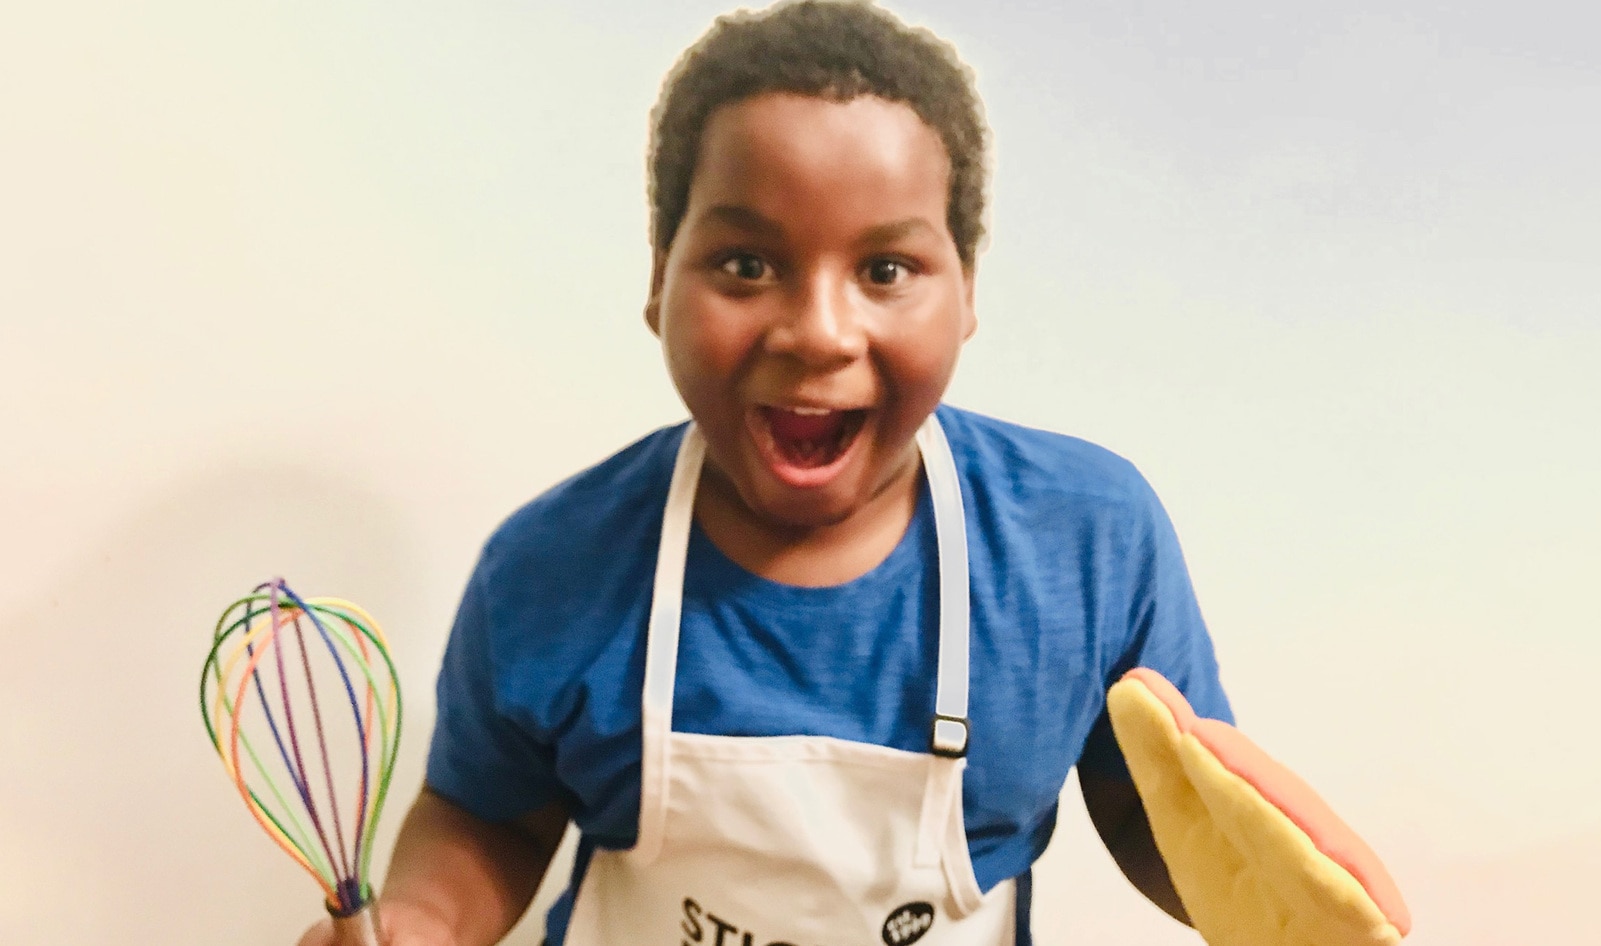 Vegan Bakery Sticky Fingers Is Hosting After-School Baking Classes for Kids